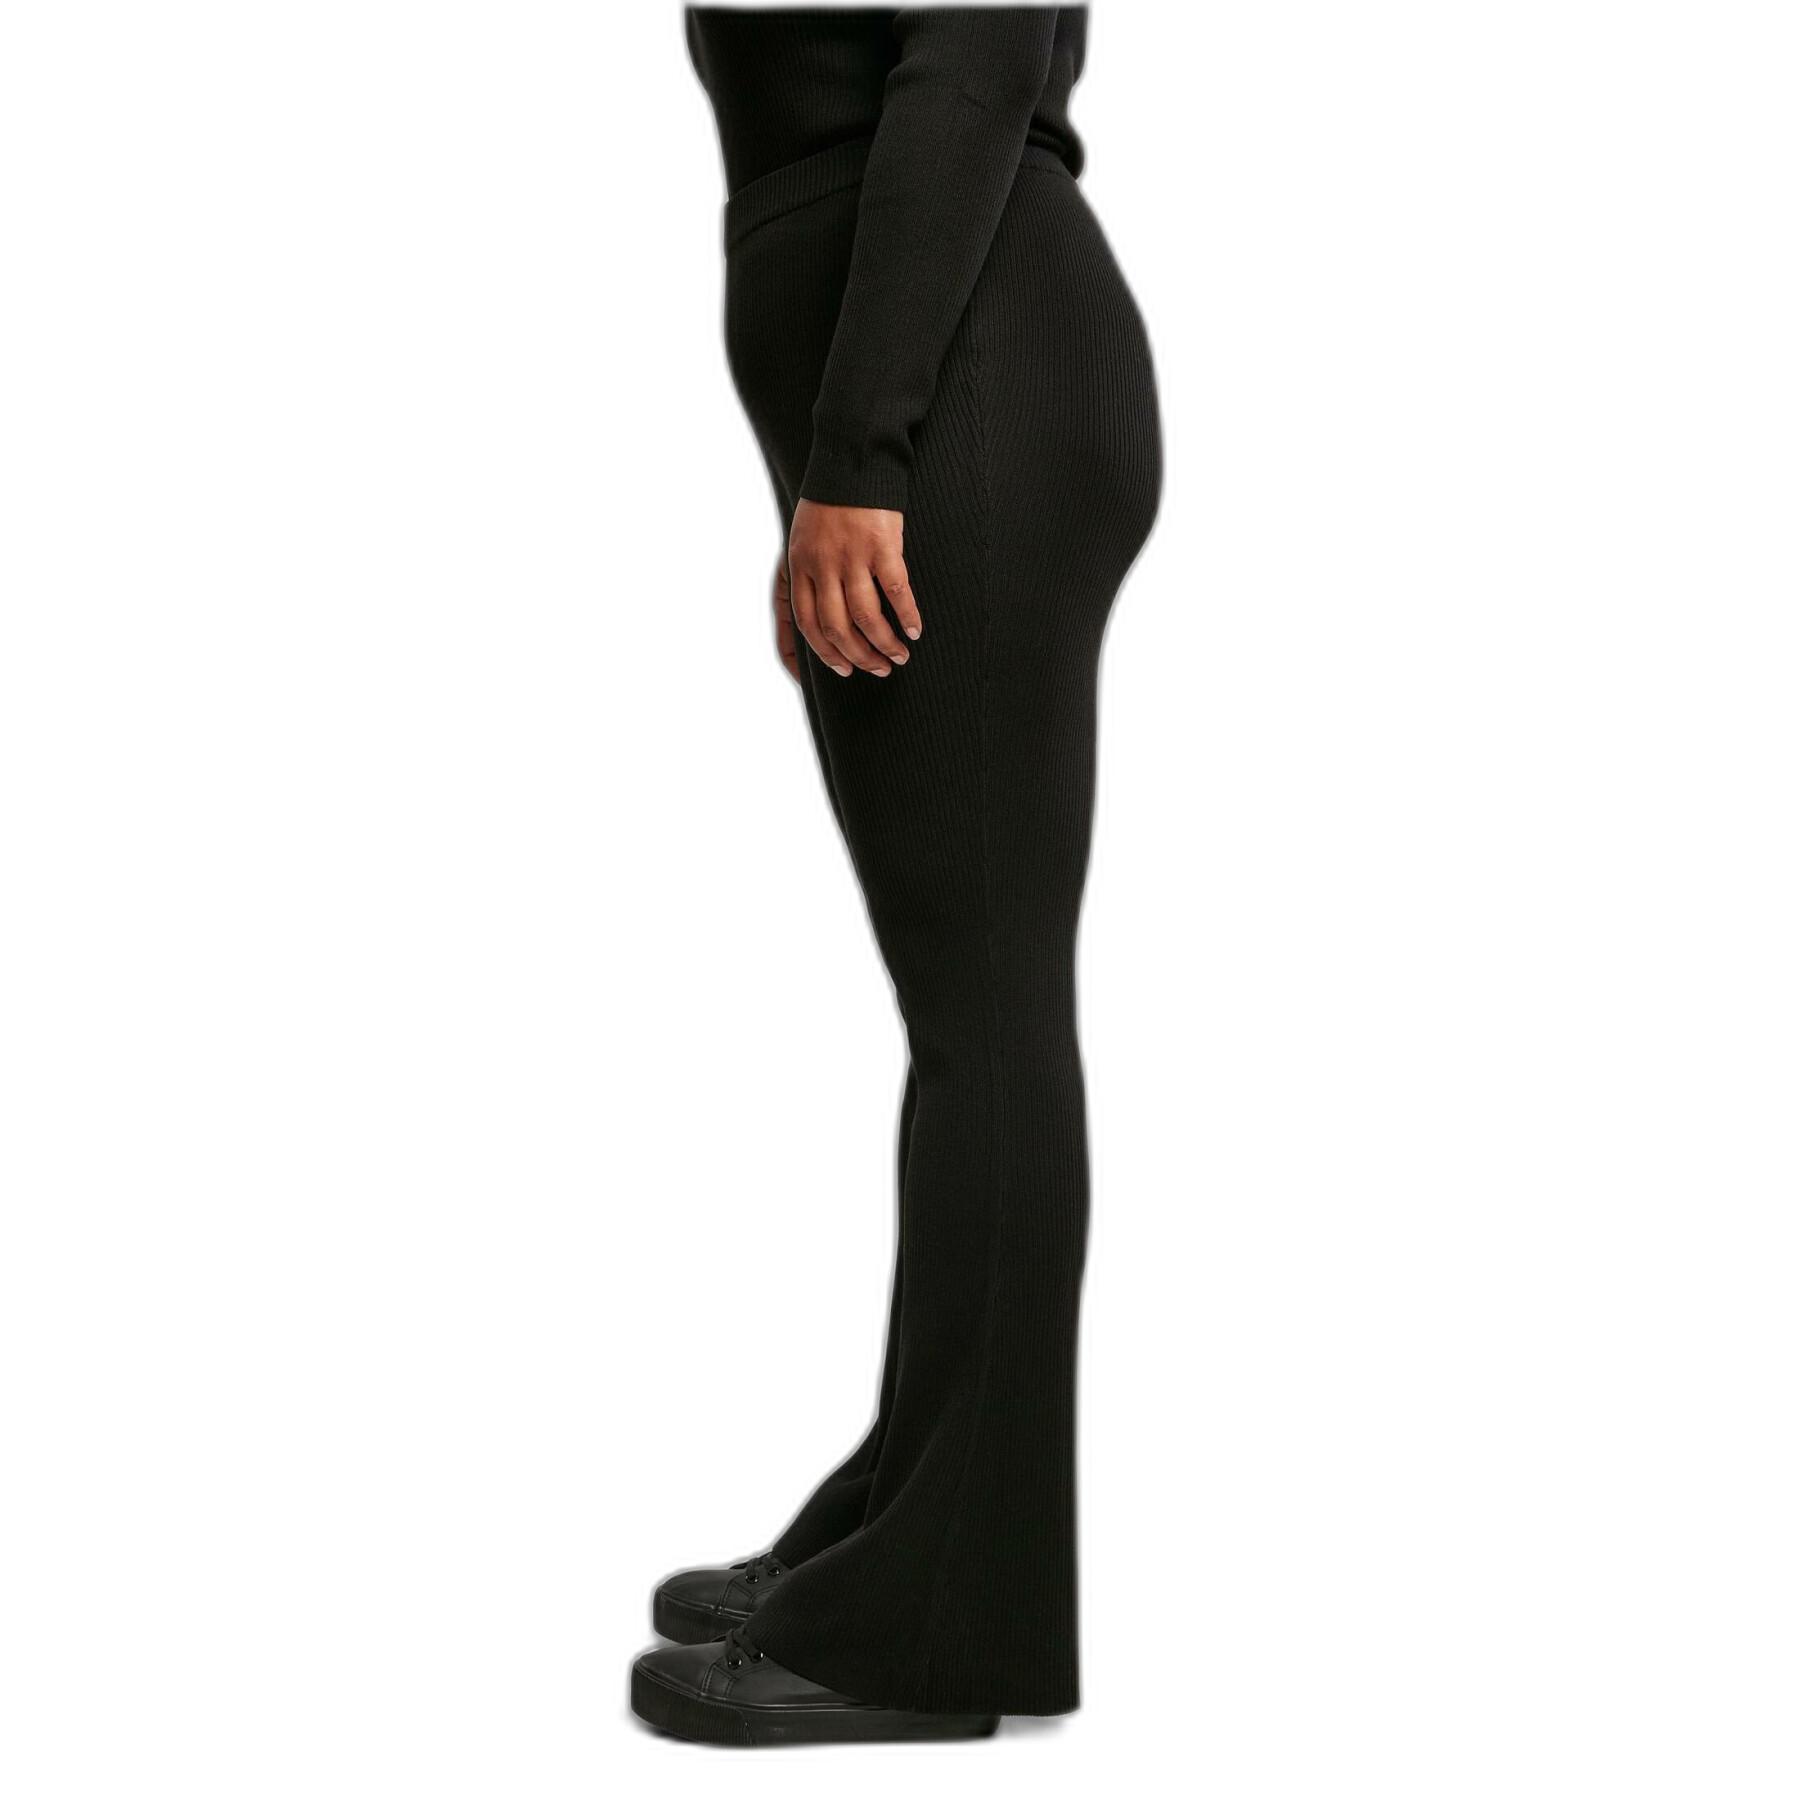 Legging woman Urban Classics Rib Knit Bootcut GT - Tights & Leggings -  Women's Clothing